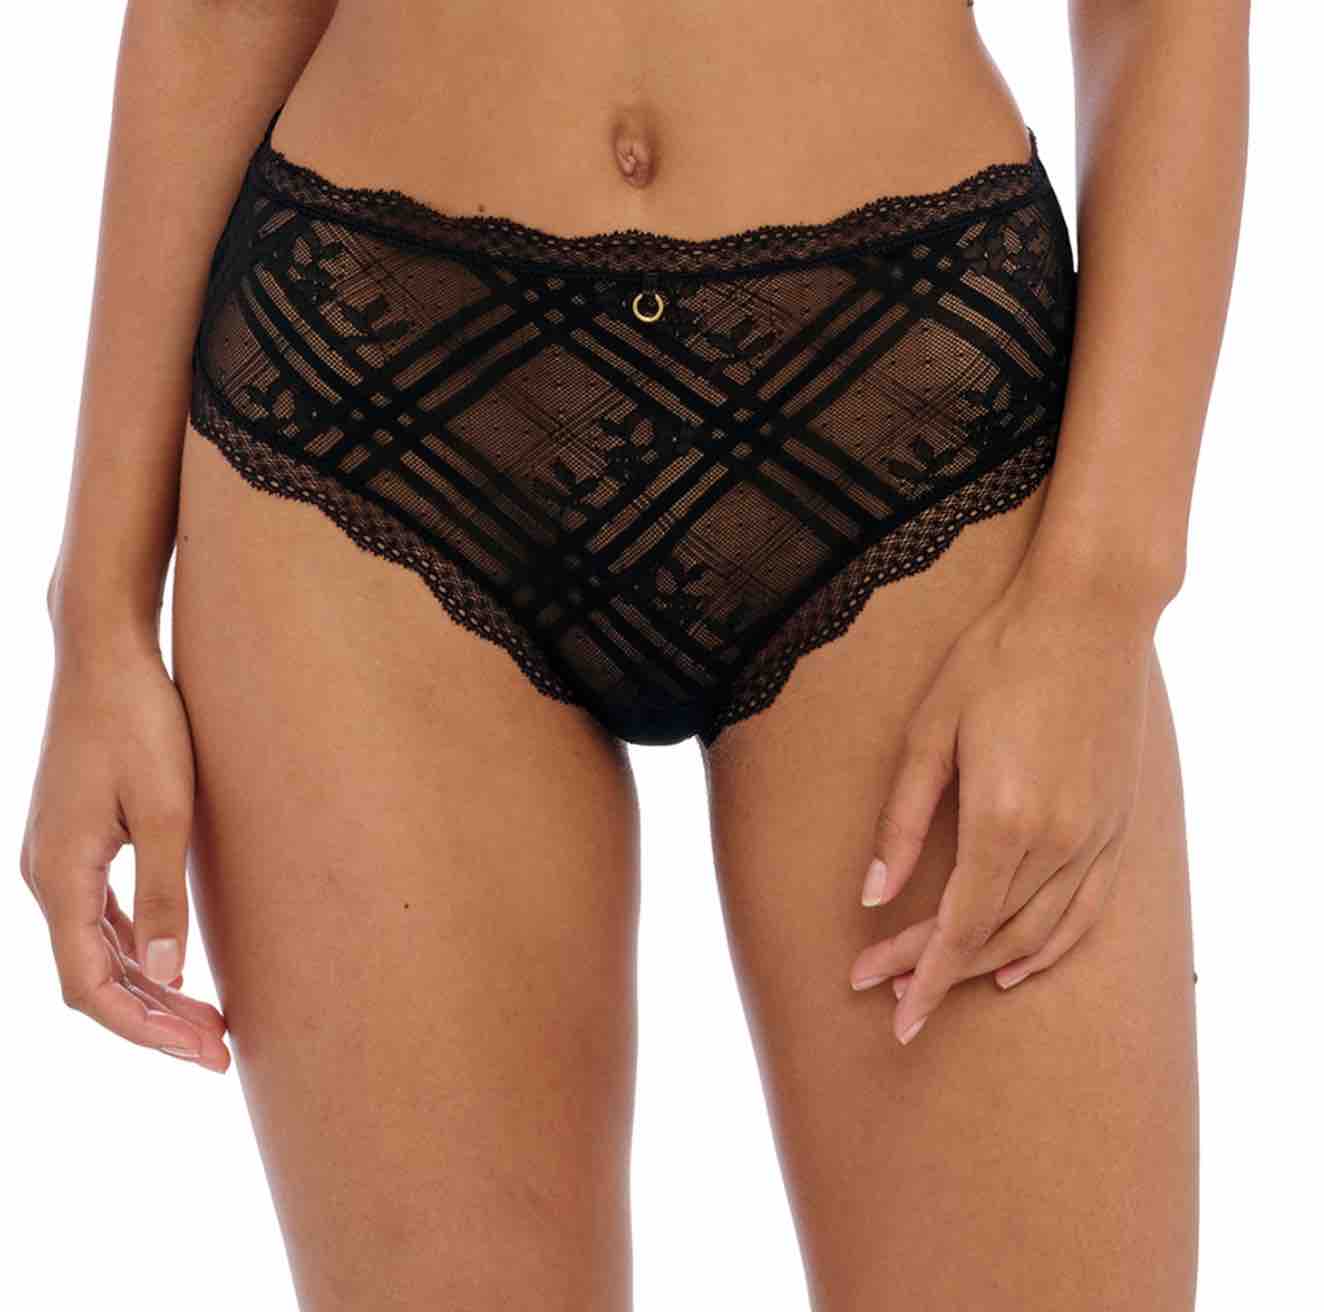 High Waist lace underwear brief women's | Made in Canada lingerie